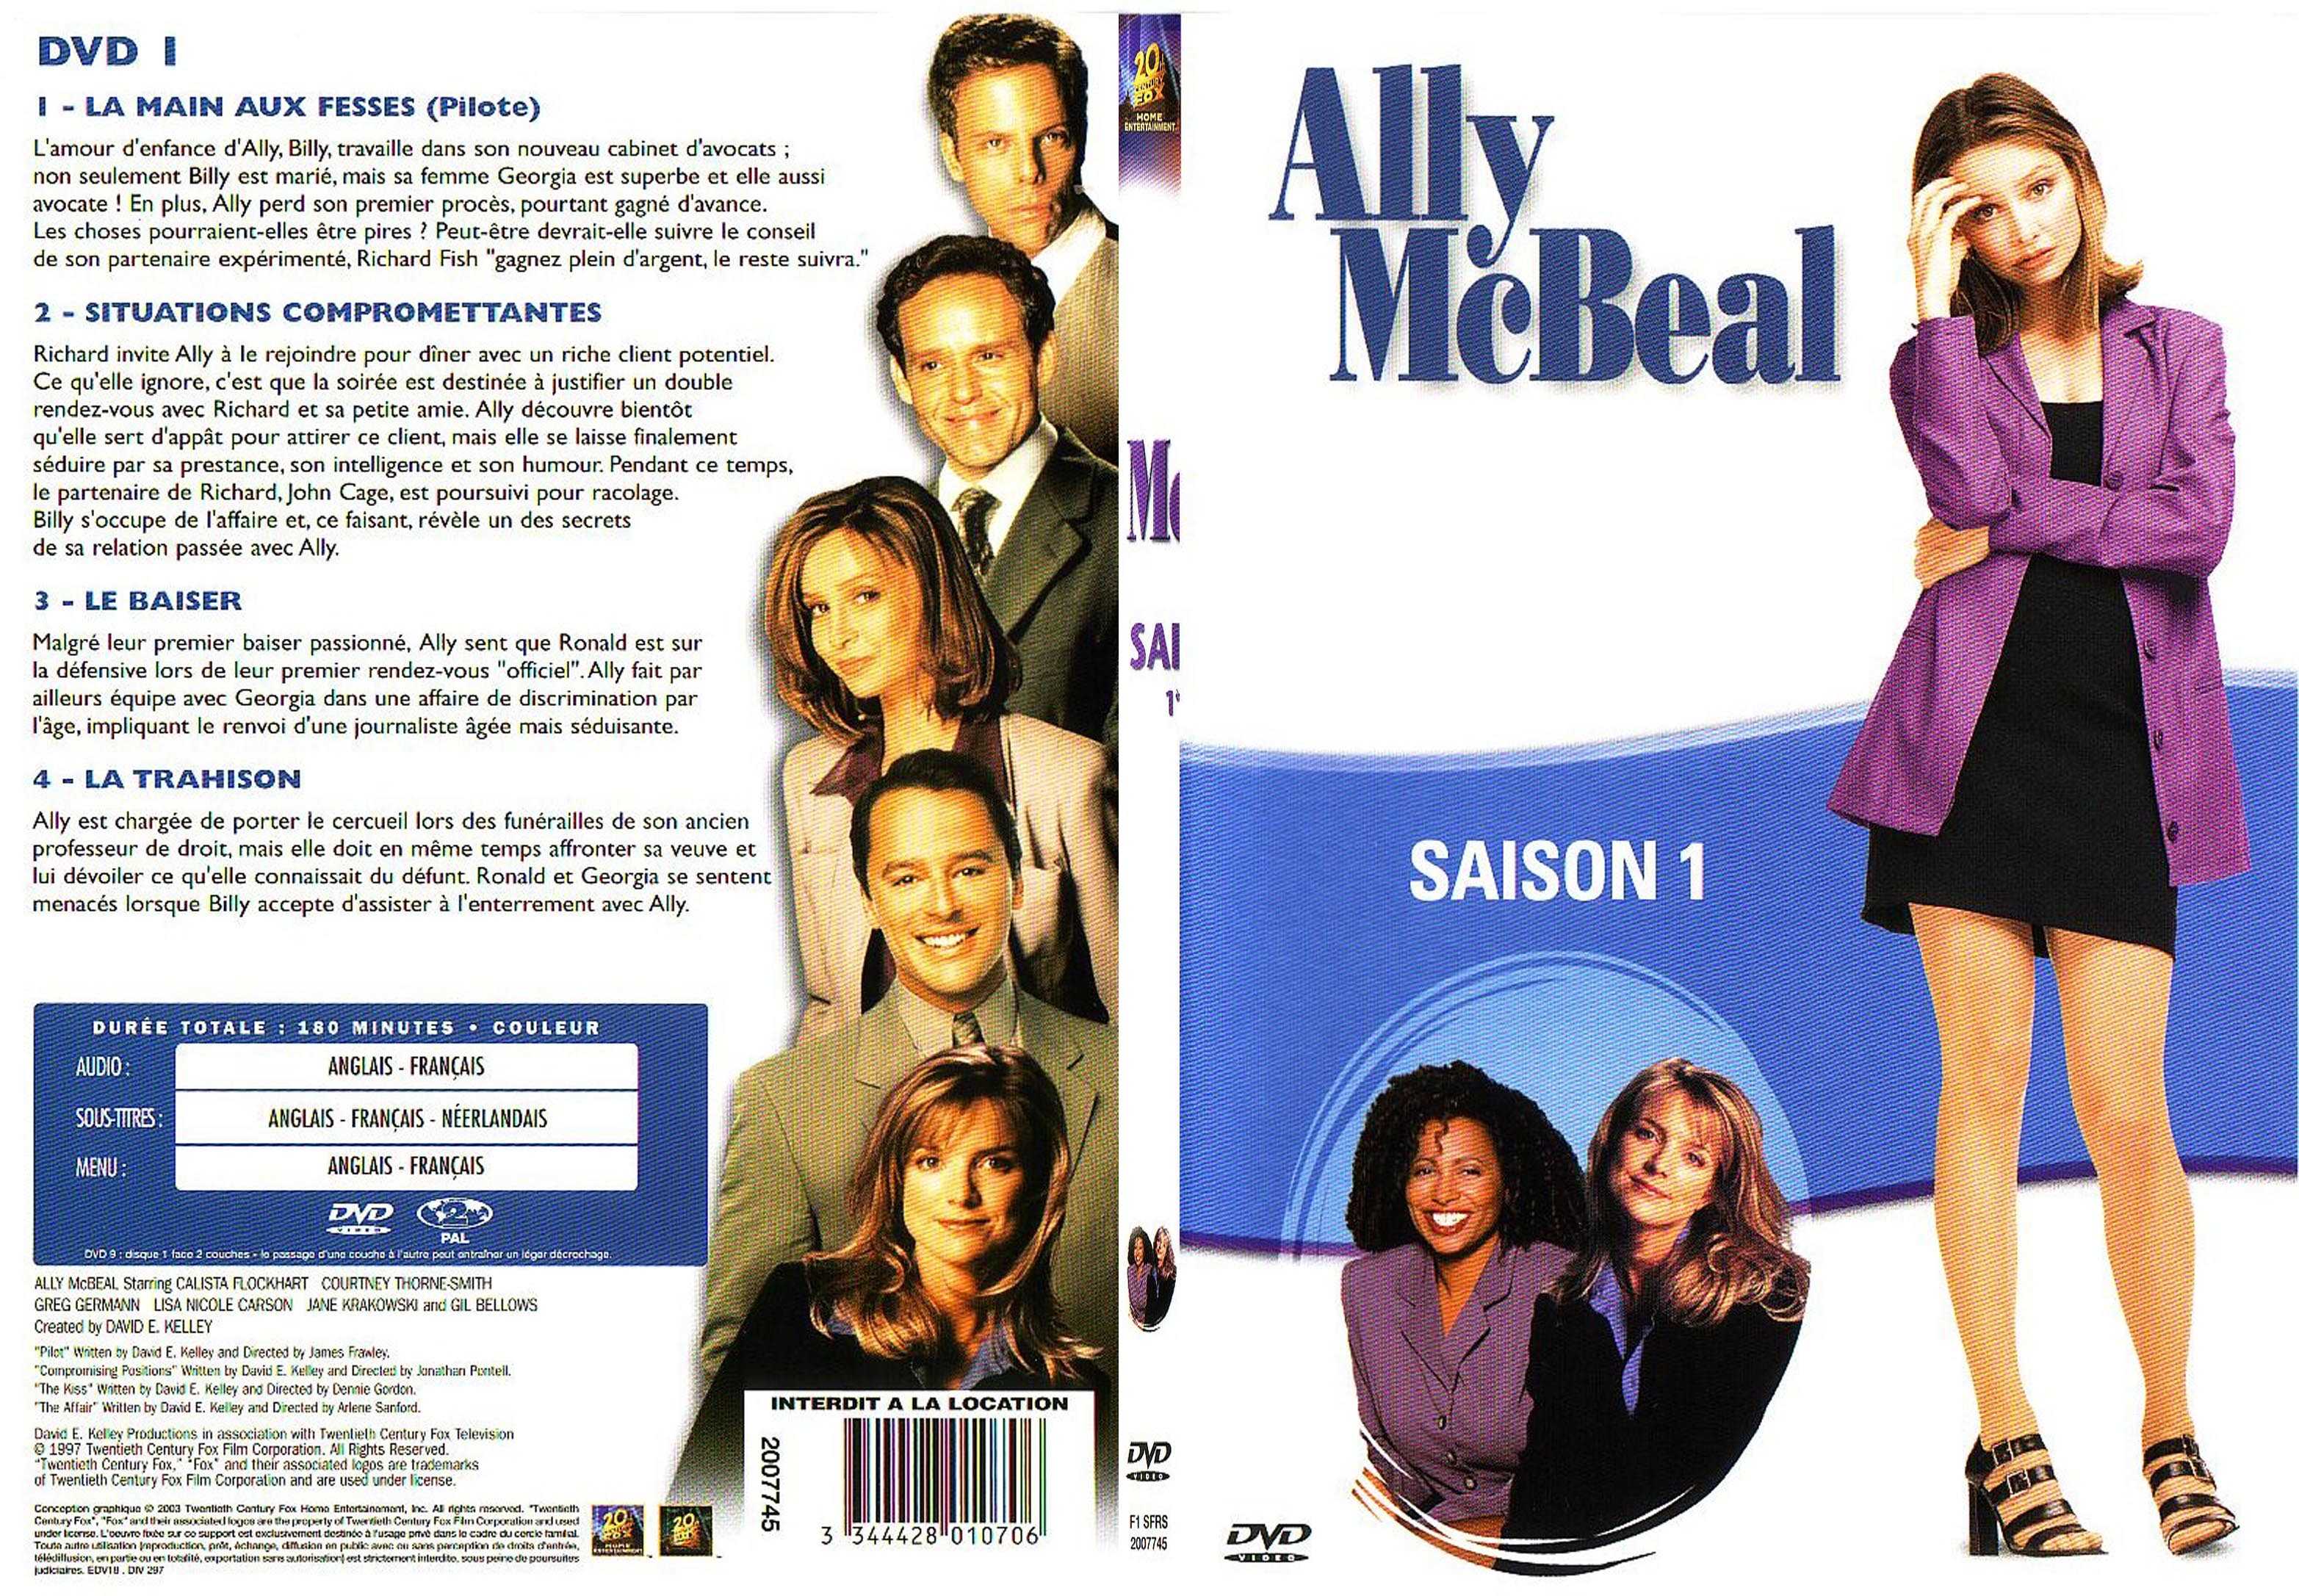 Jaquette DVD Ally McBeal saison 1 dvd 1 - SLIM